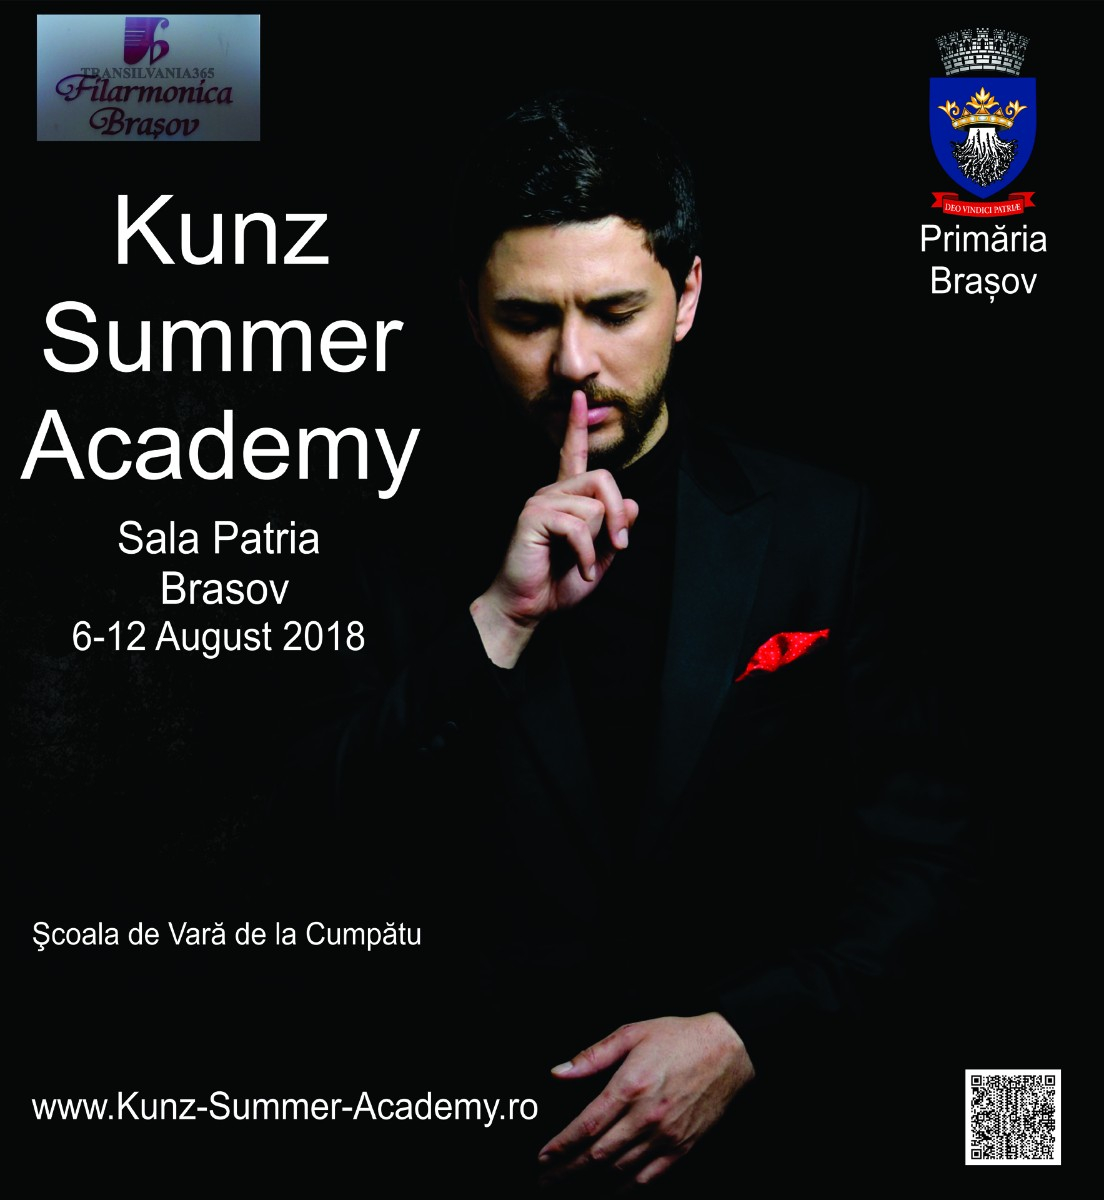 Kunz Summer Academy